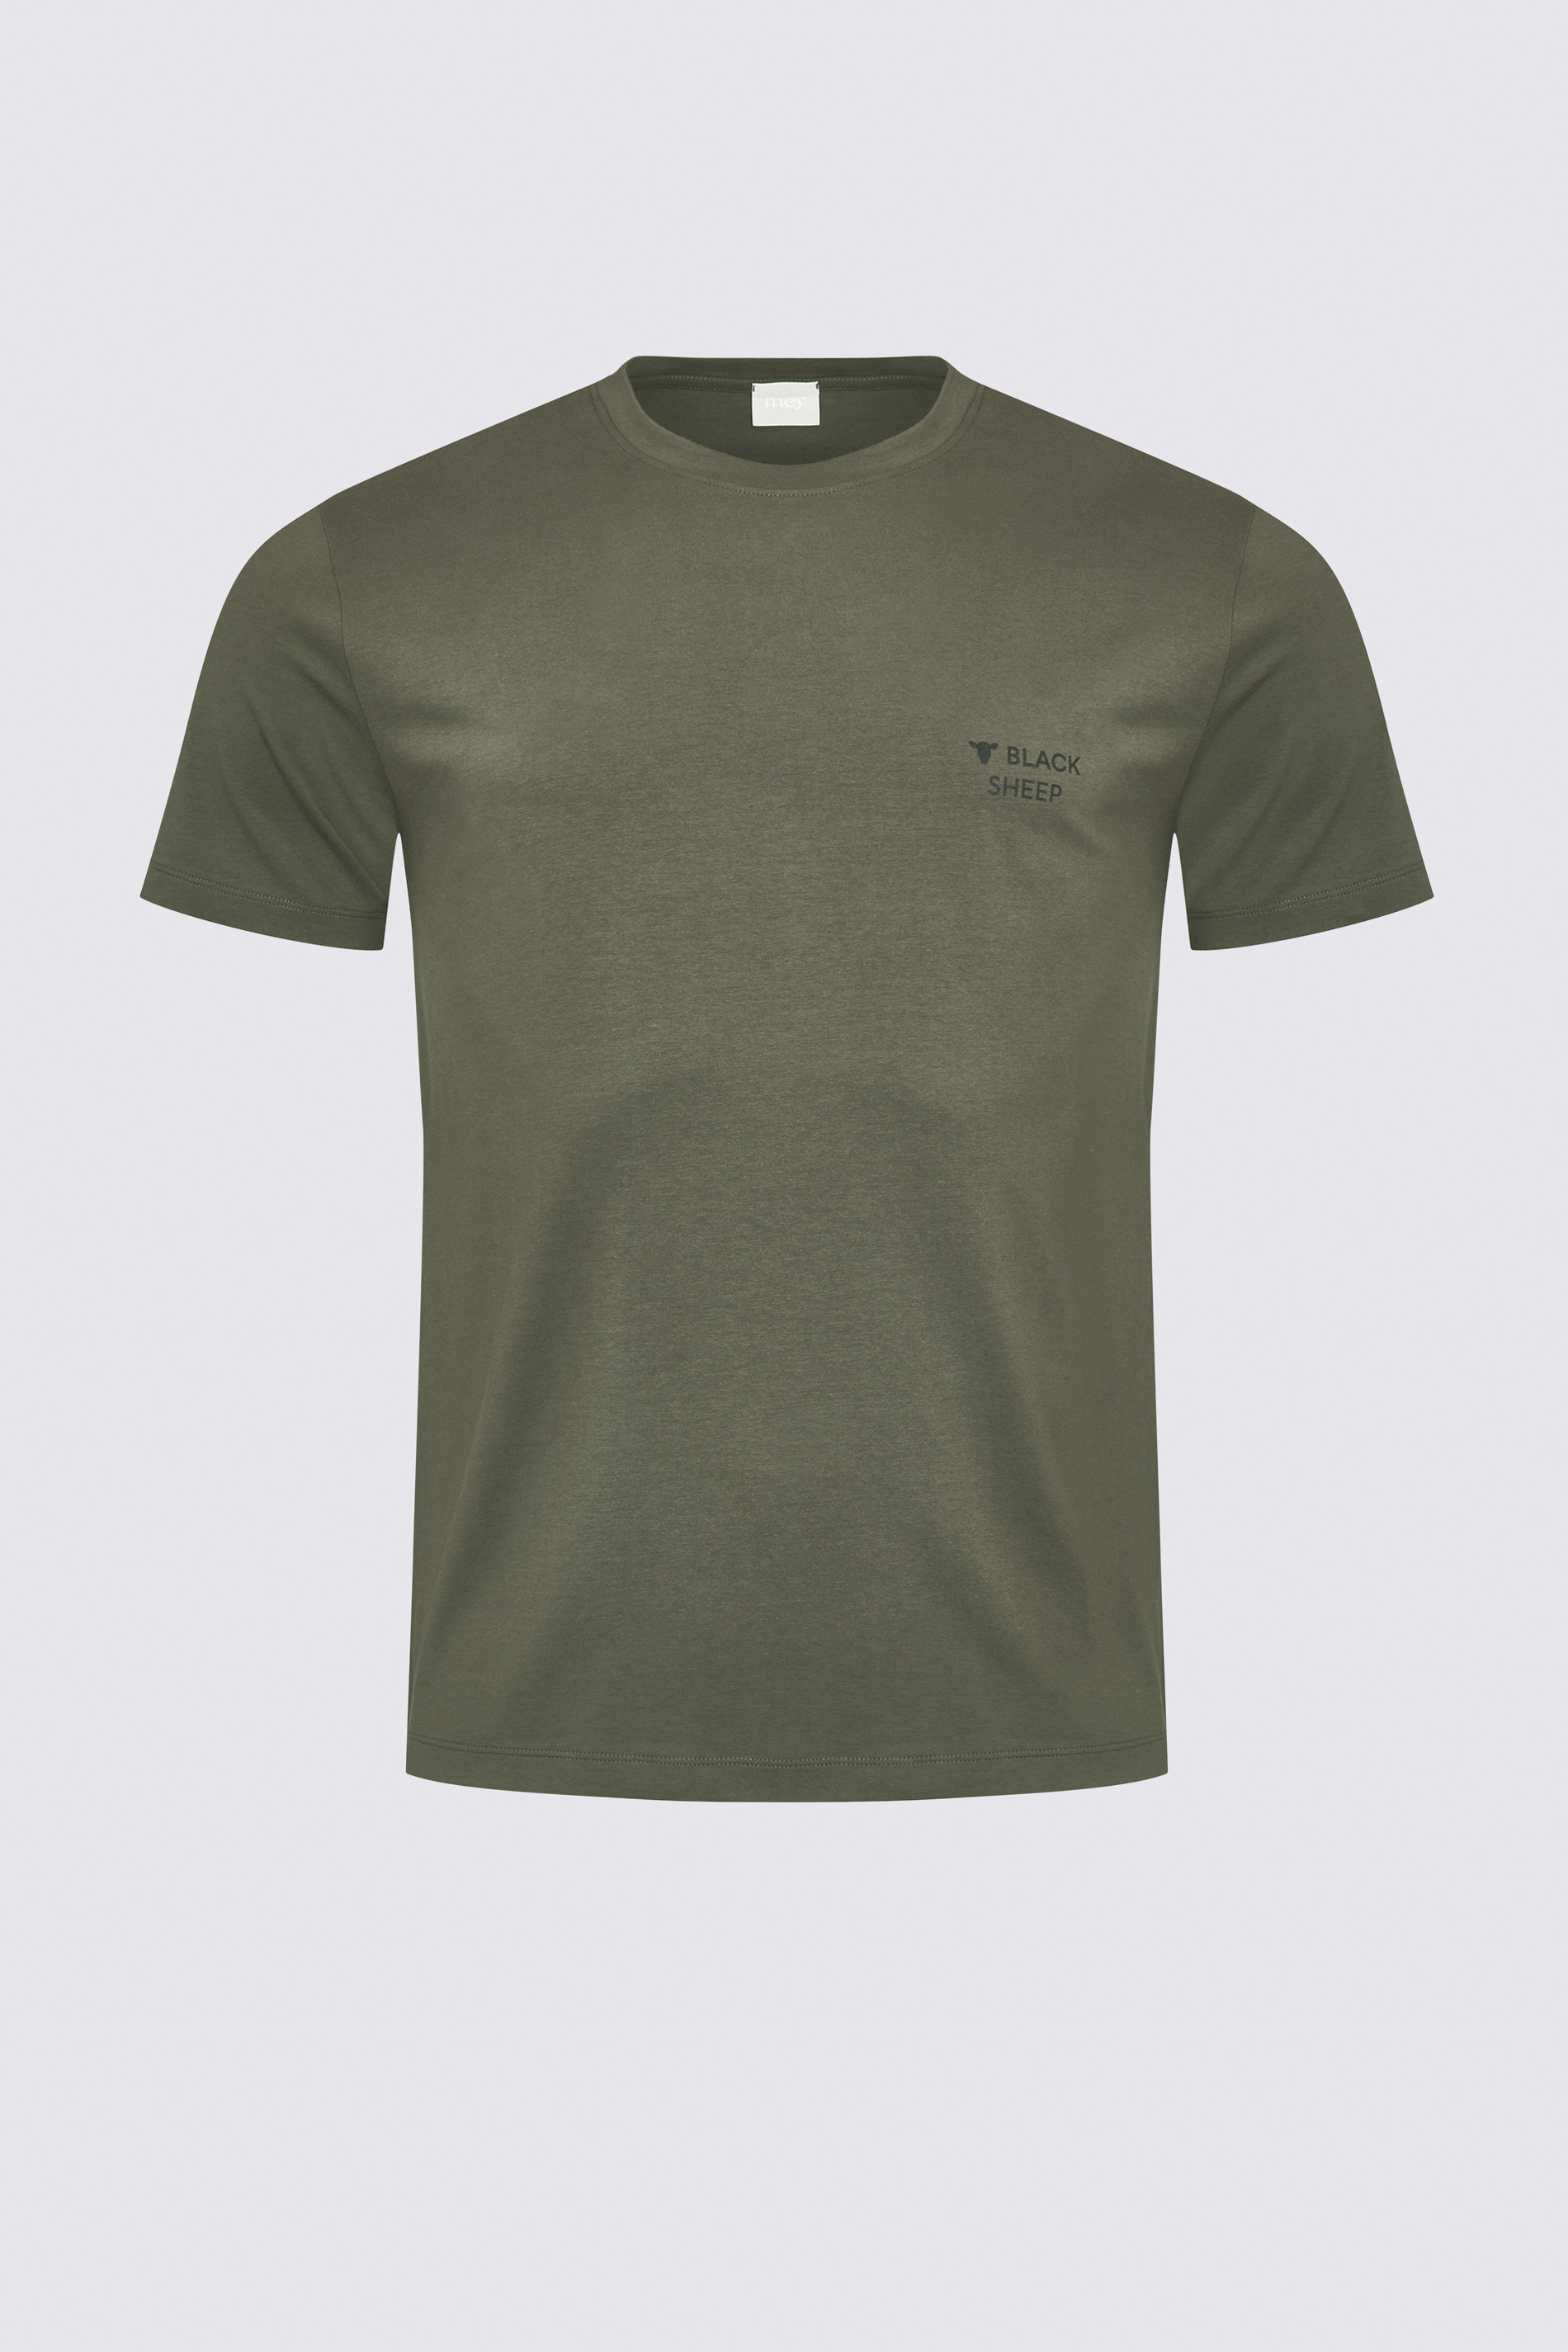 T-Shirt Khaki Serie RE:THINK BLACK Freisteller | mey®